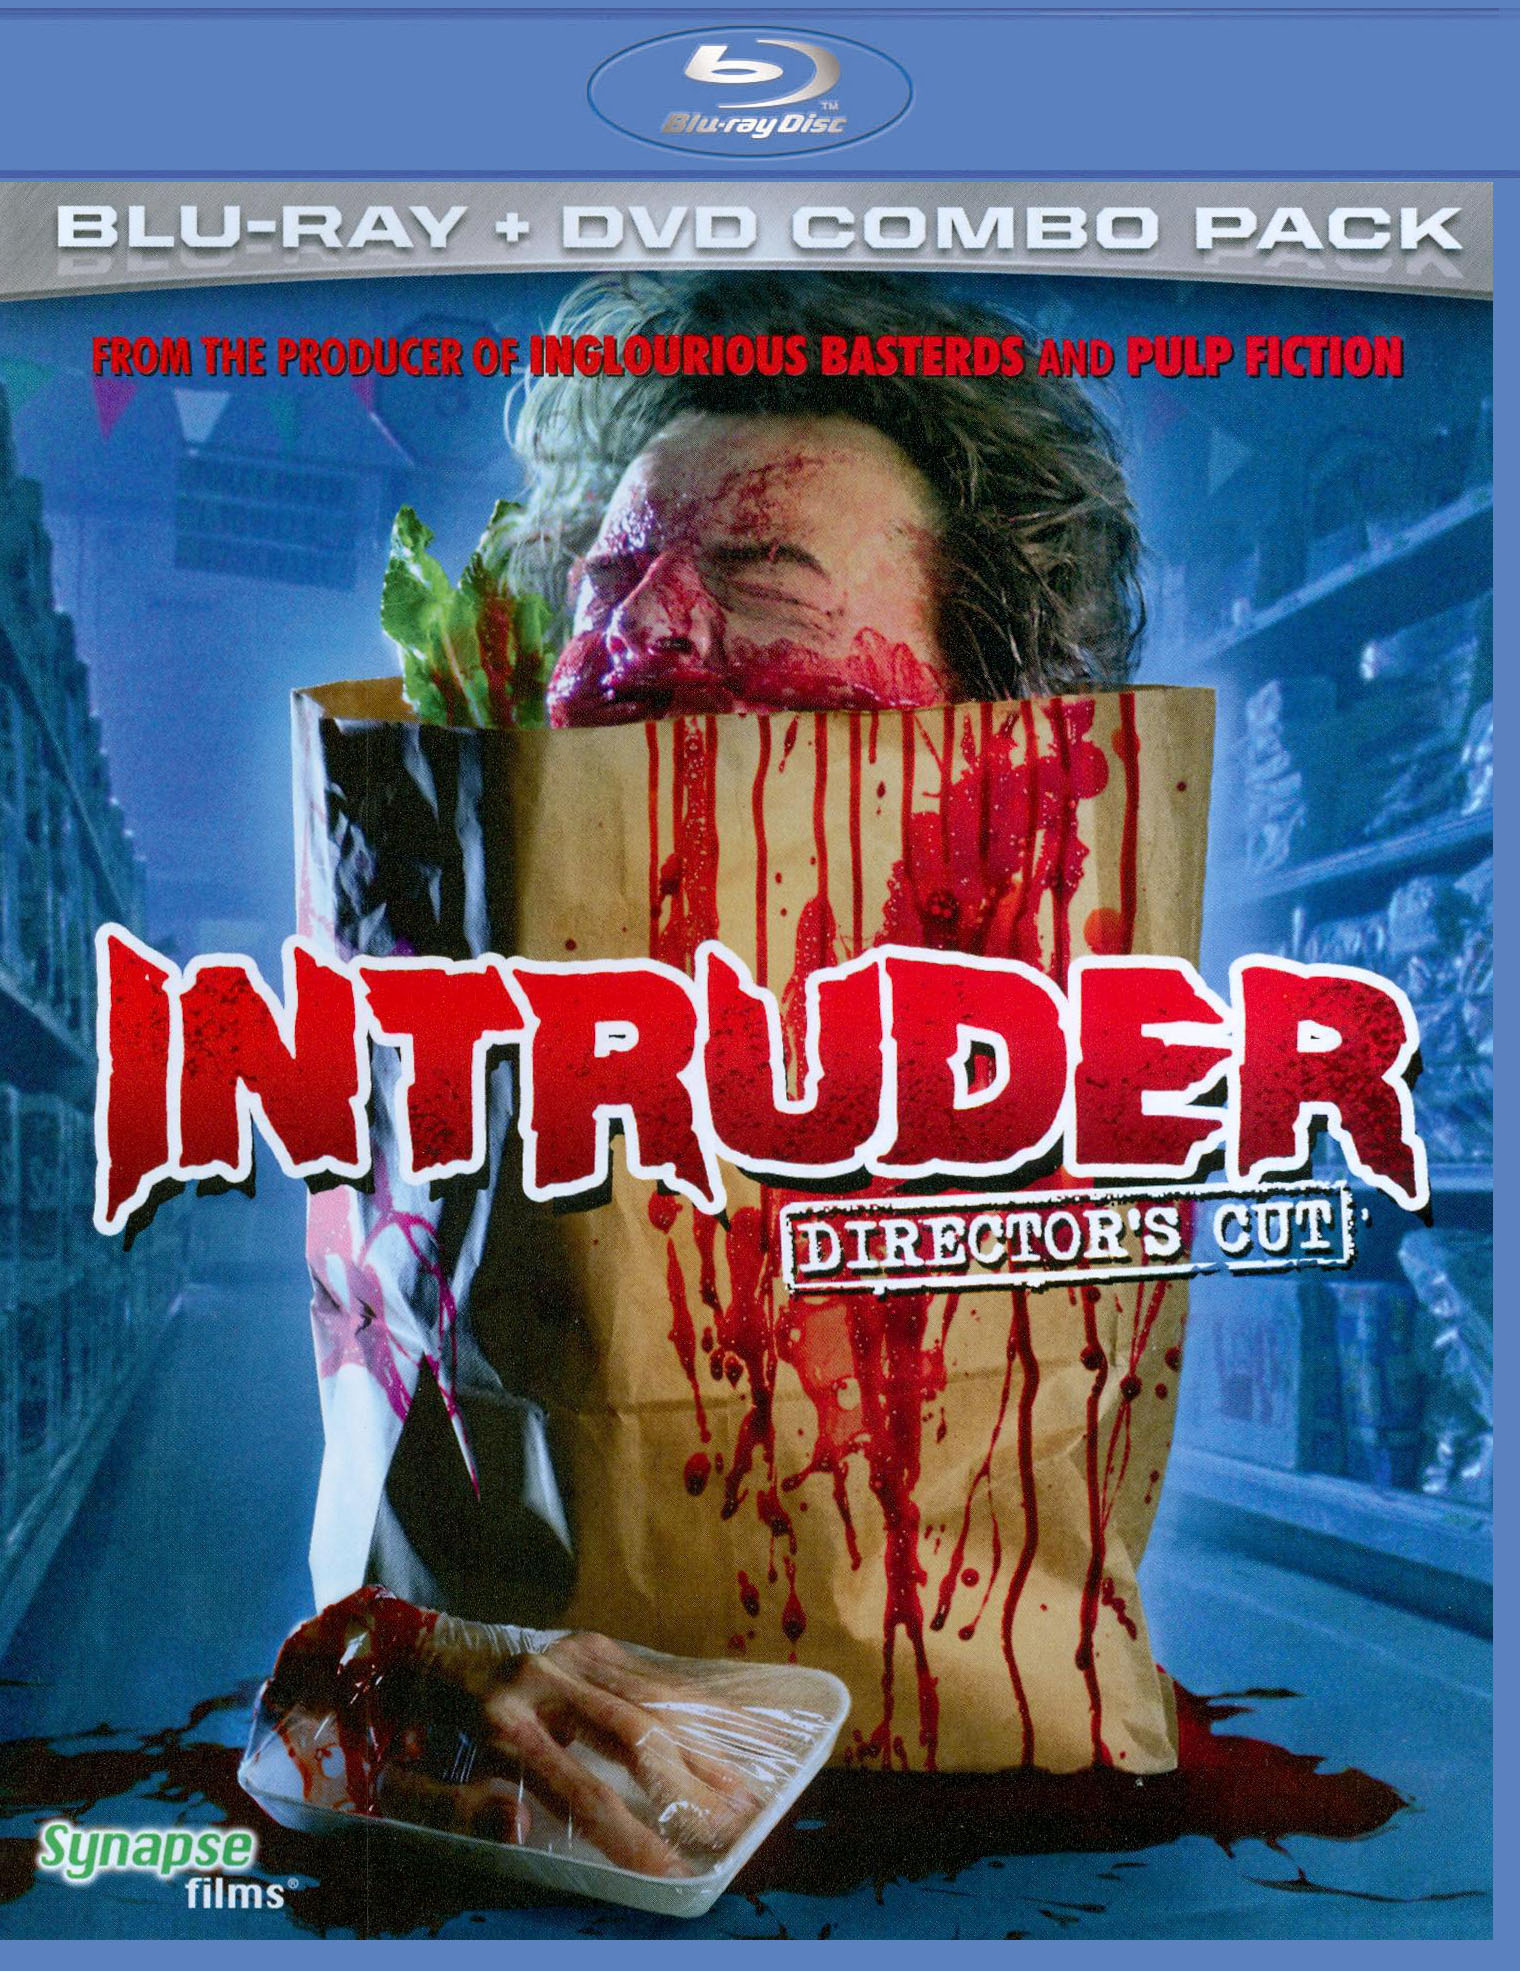 Intruders DVD Release Date